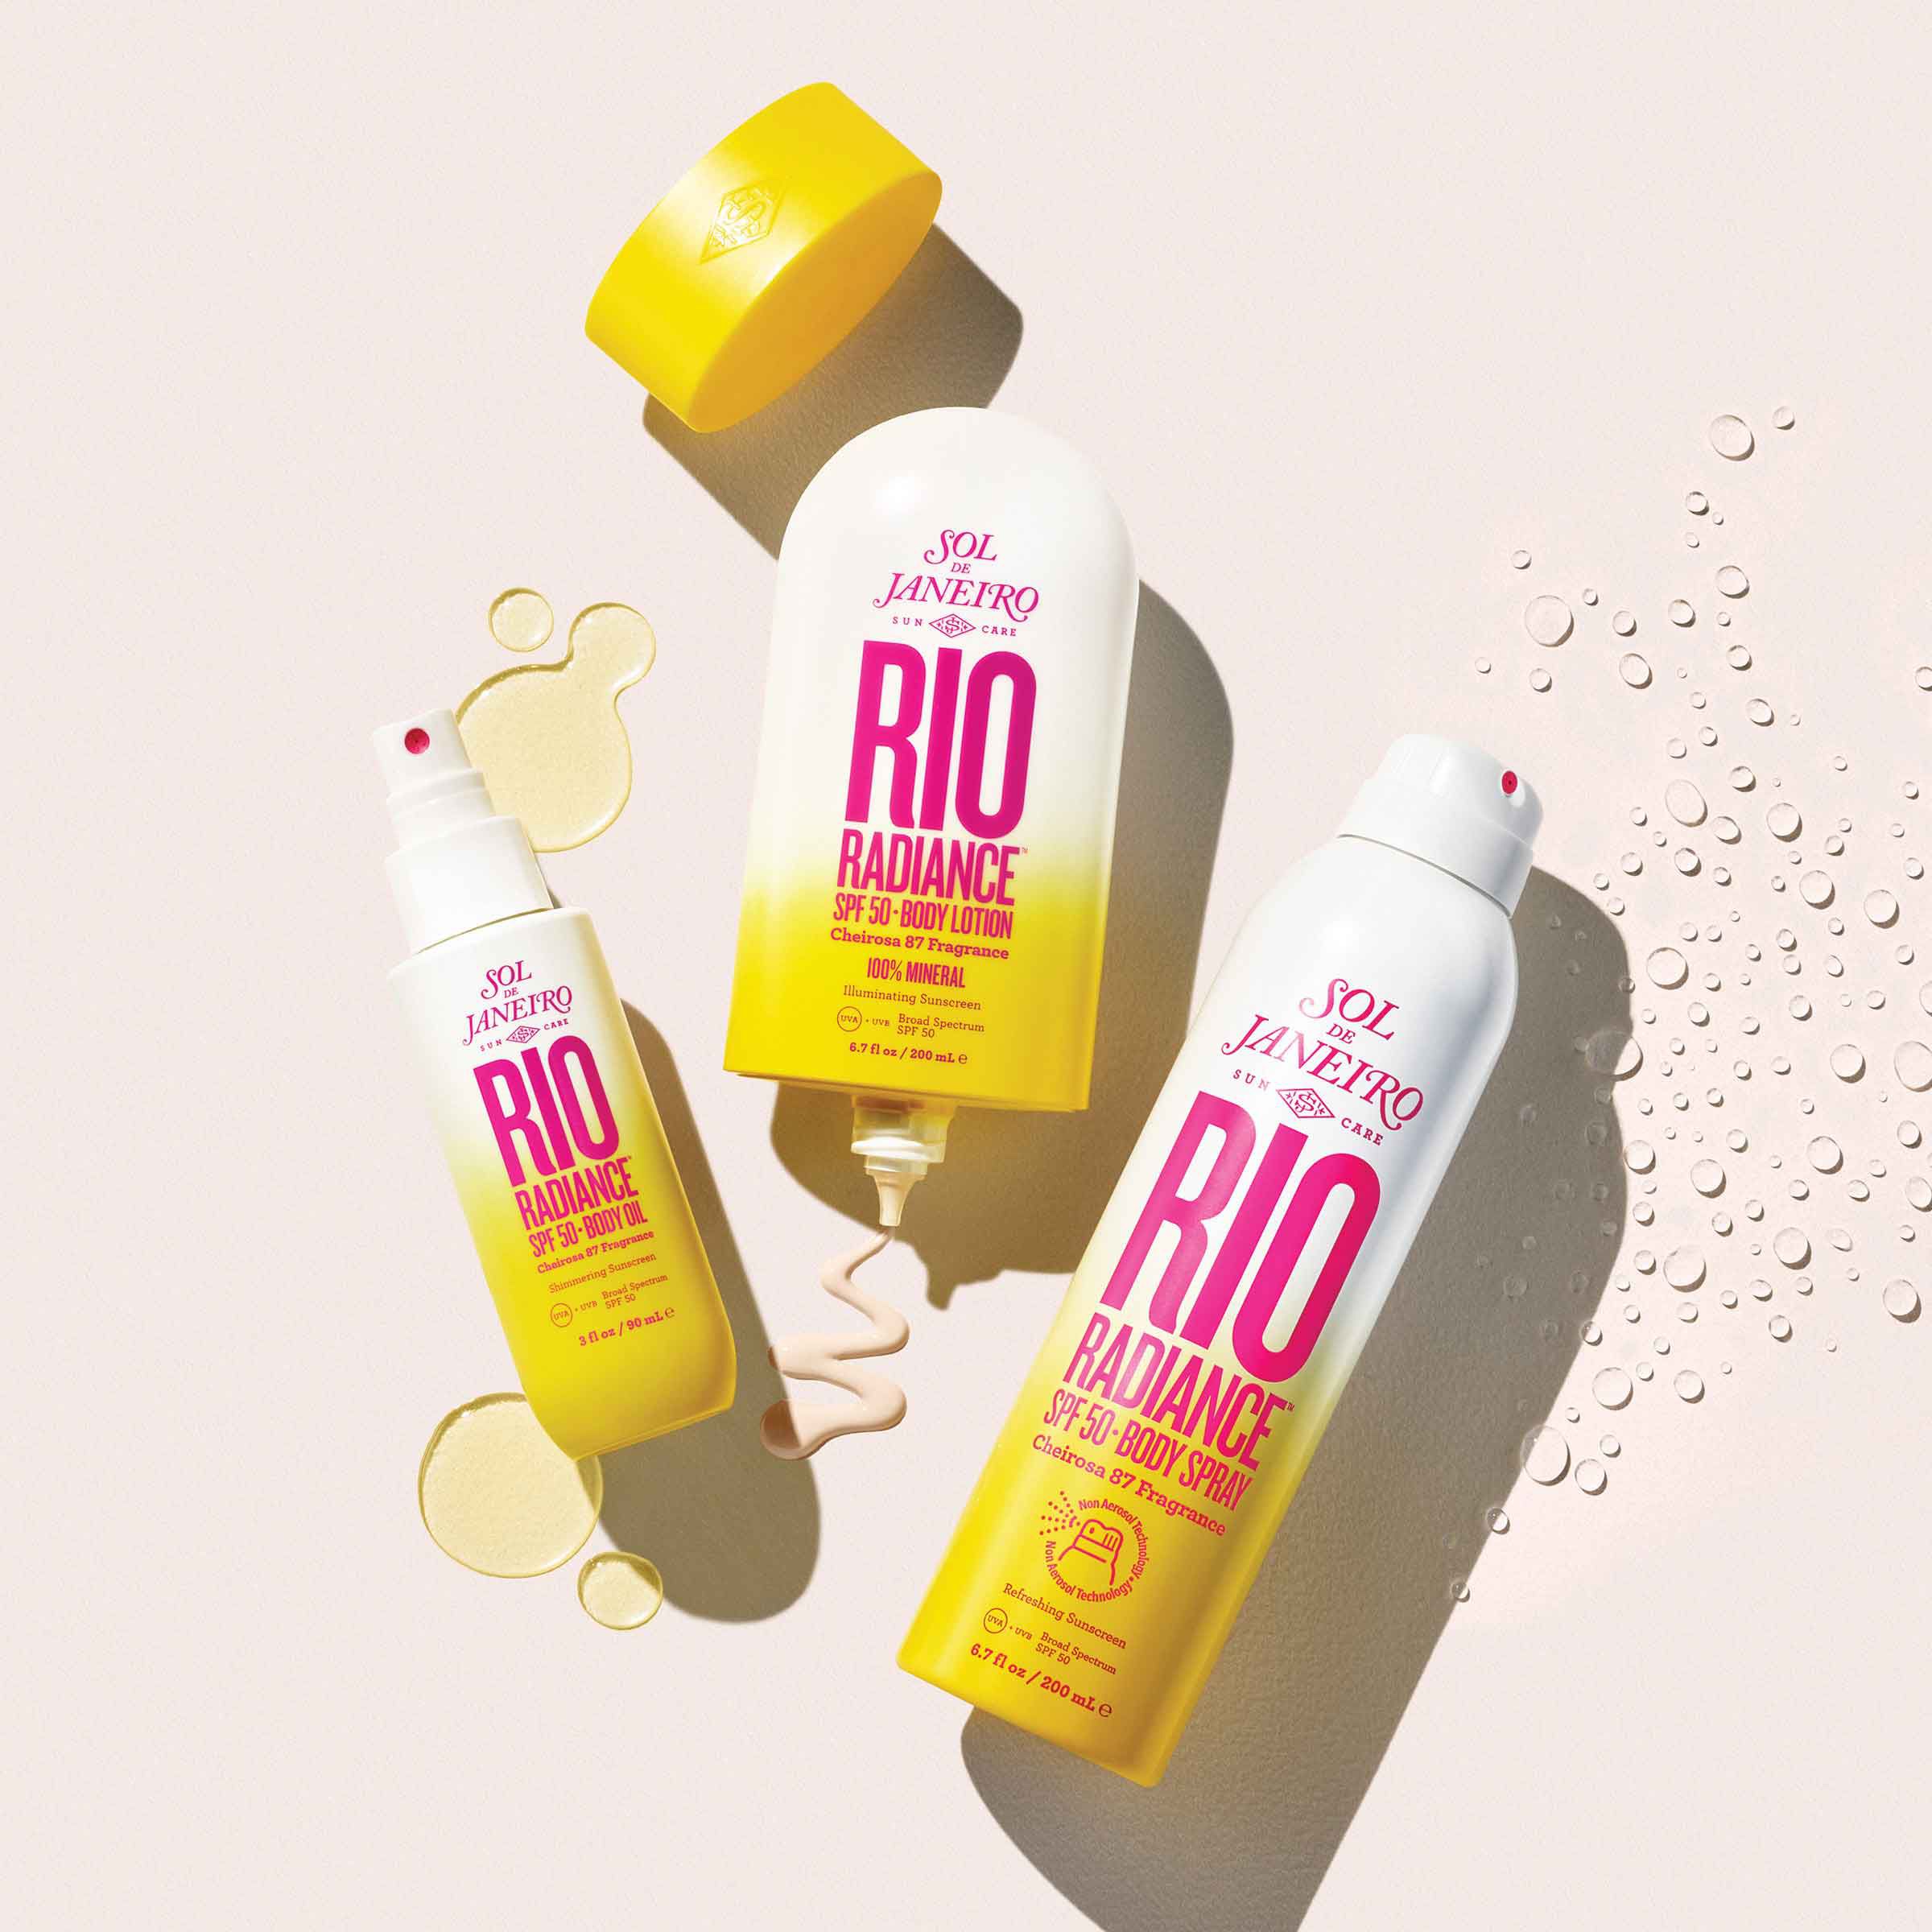 Rio Radiance™ Sunscreen Collection by Sol de Janeiro